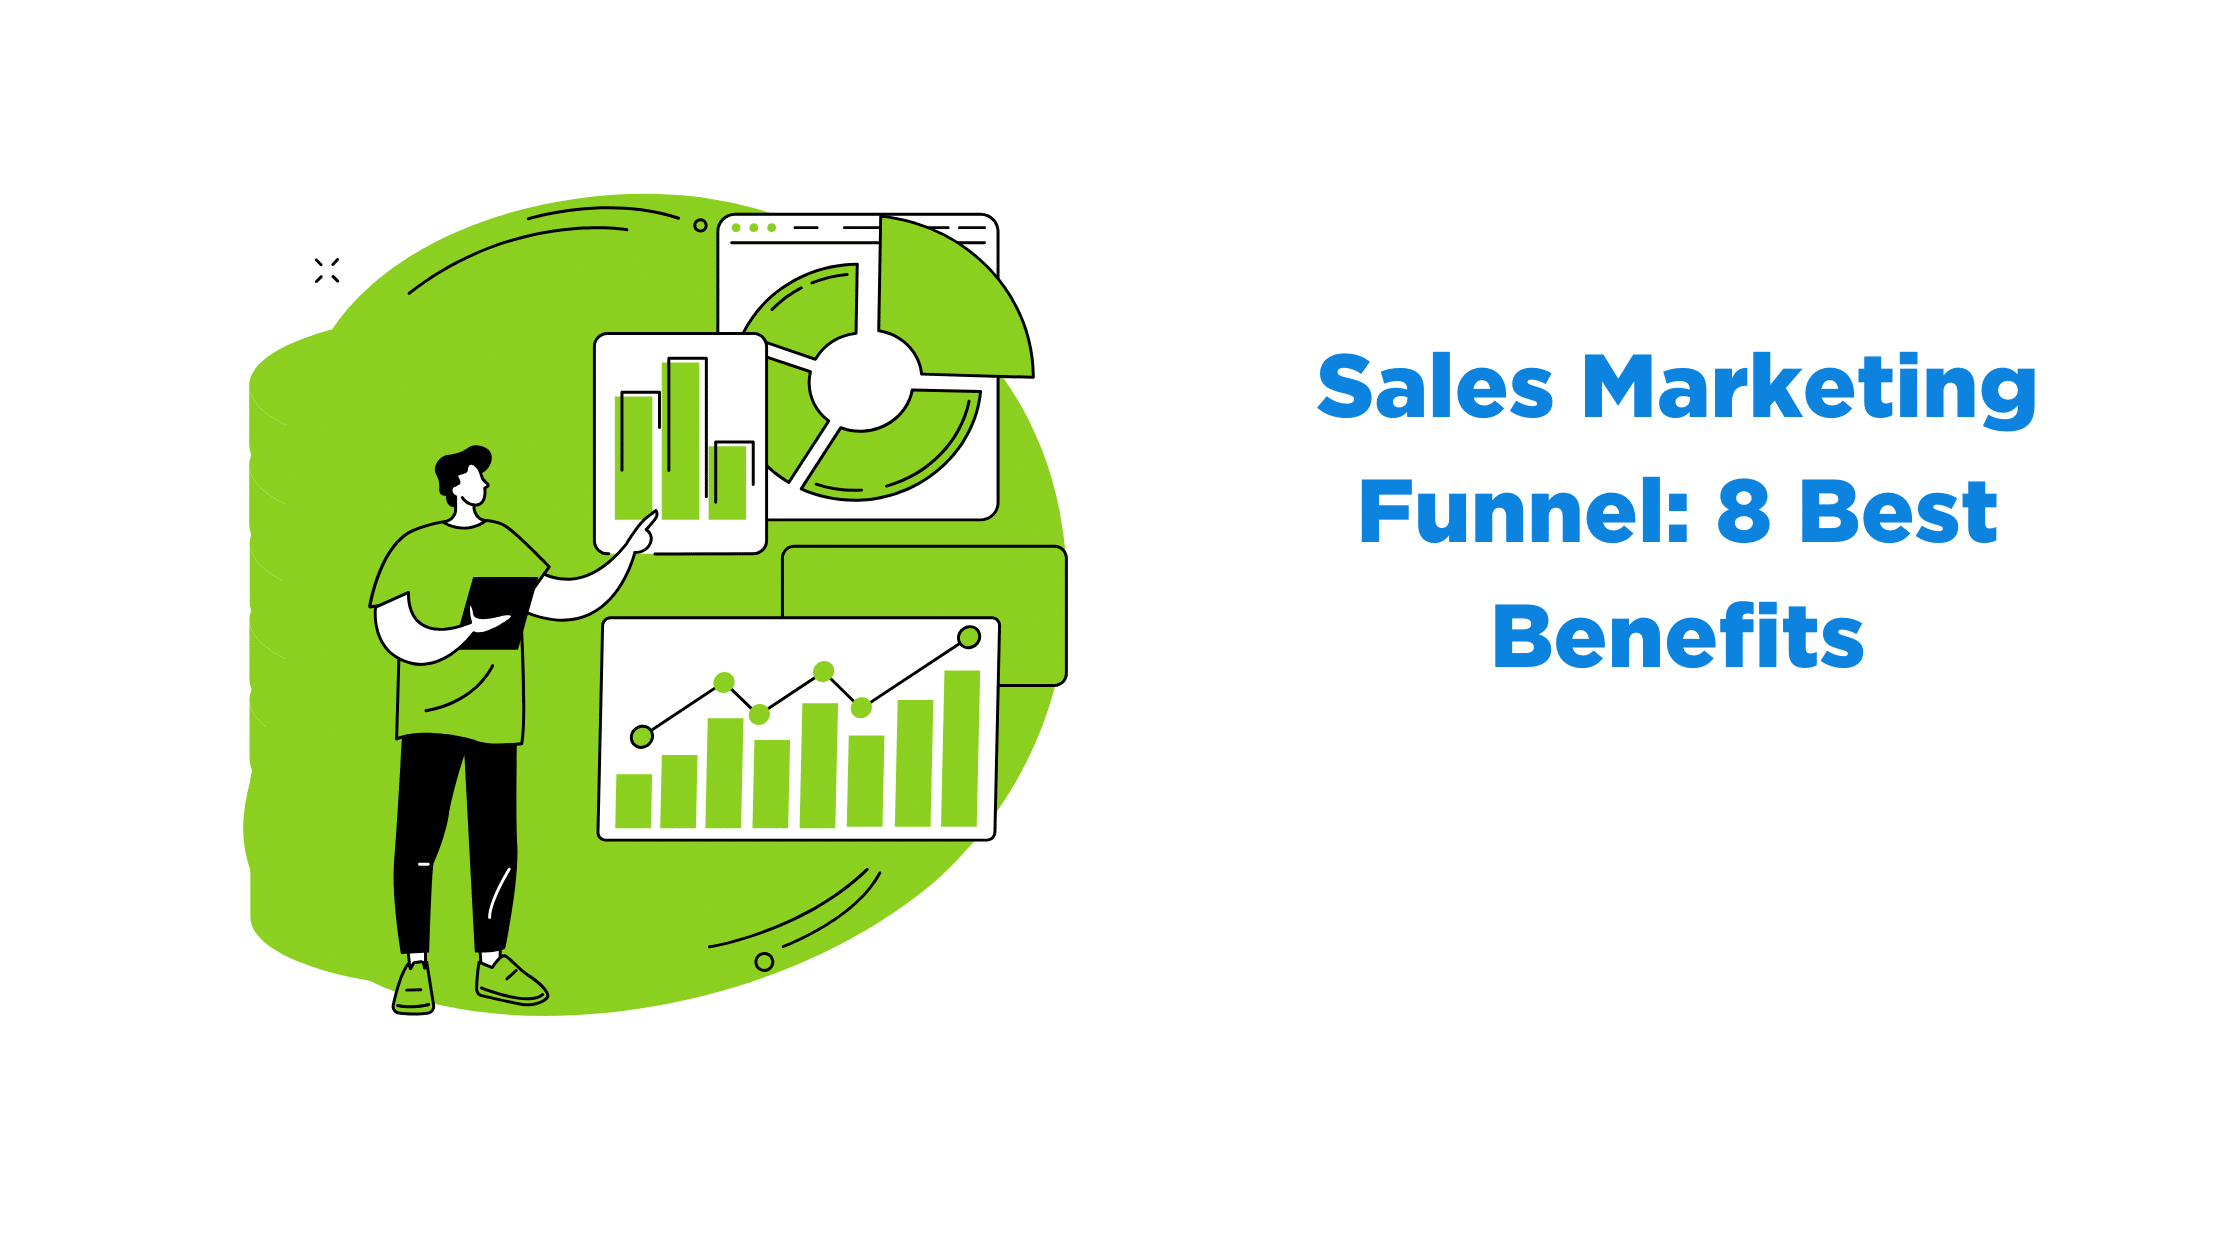 Sales Marketing Funnel: 8 Best Benefits